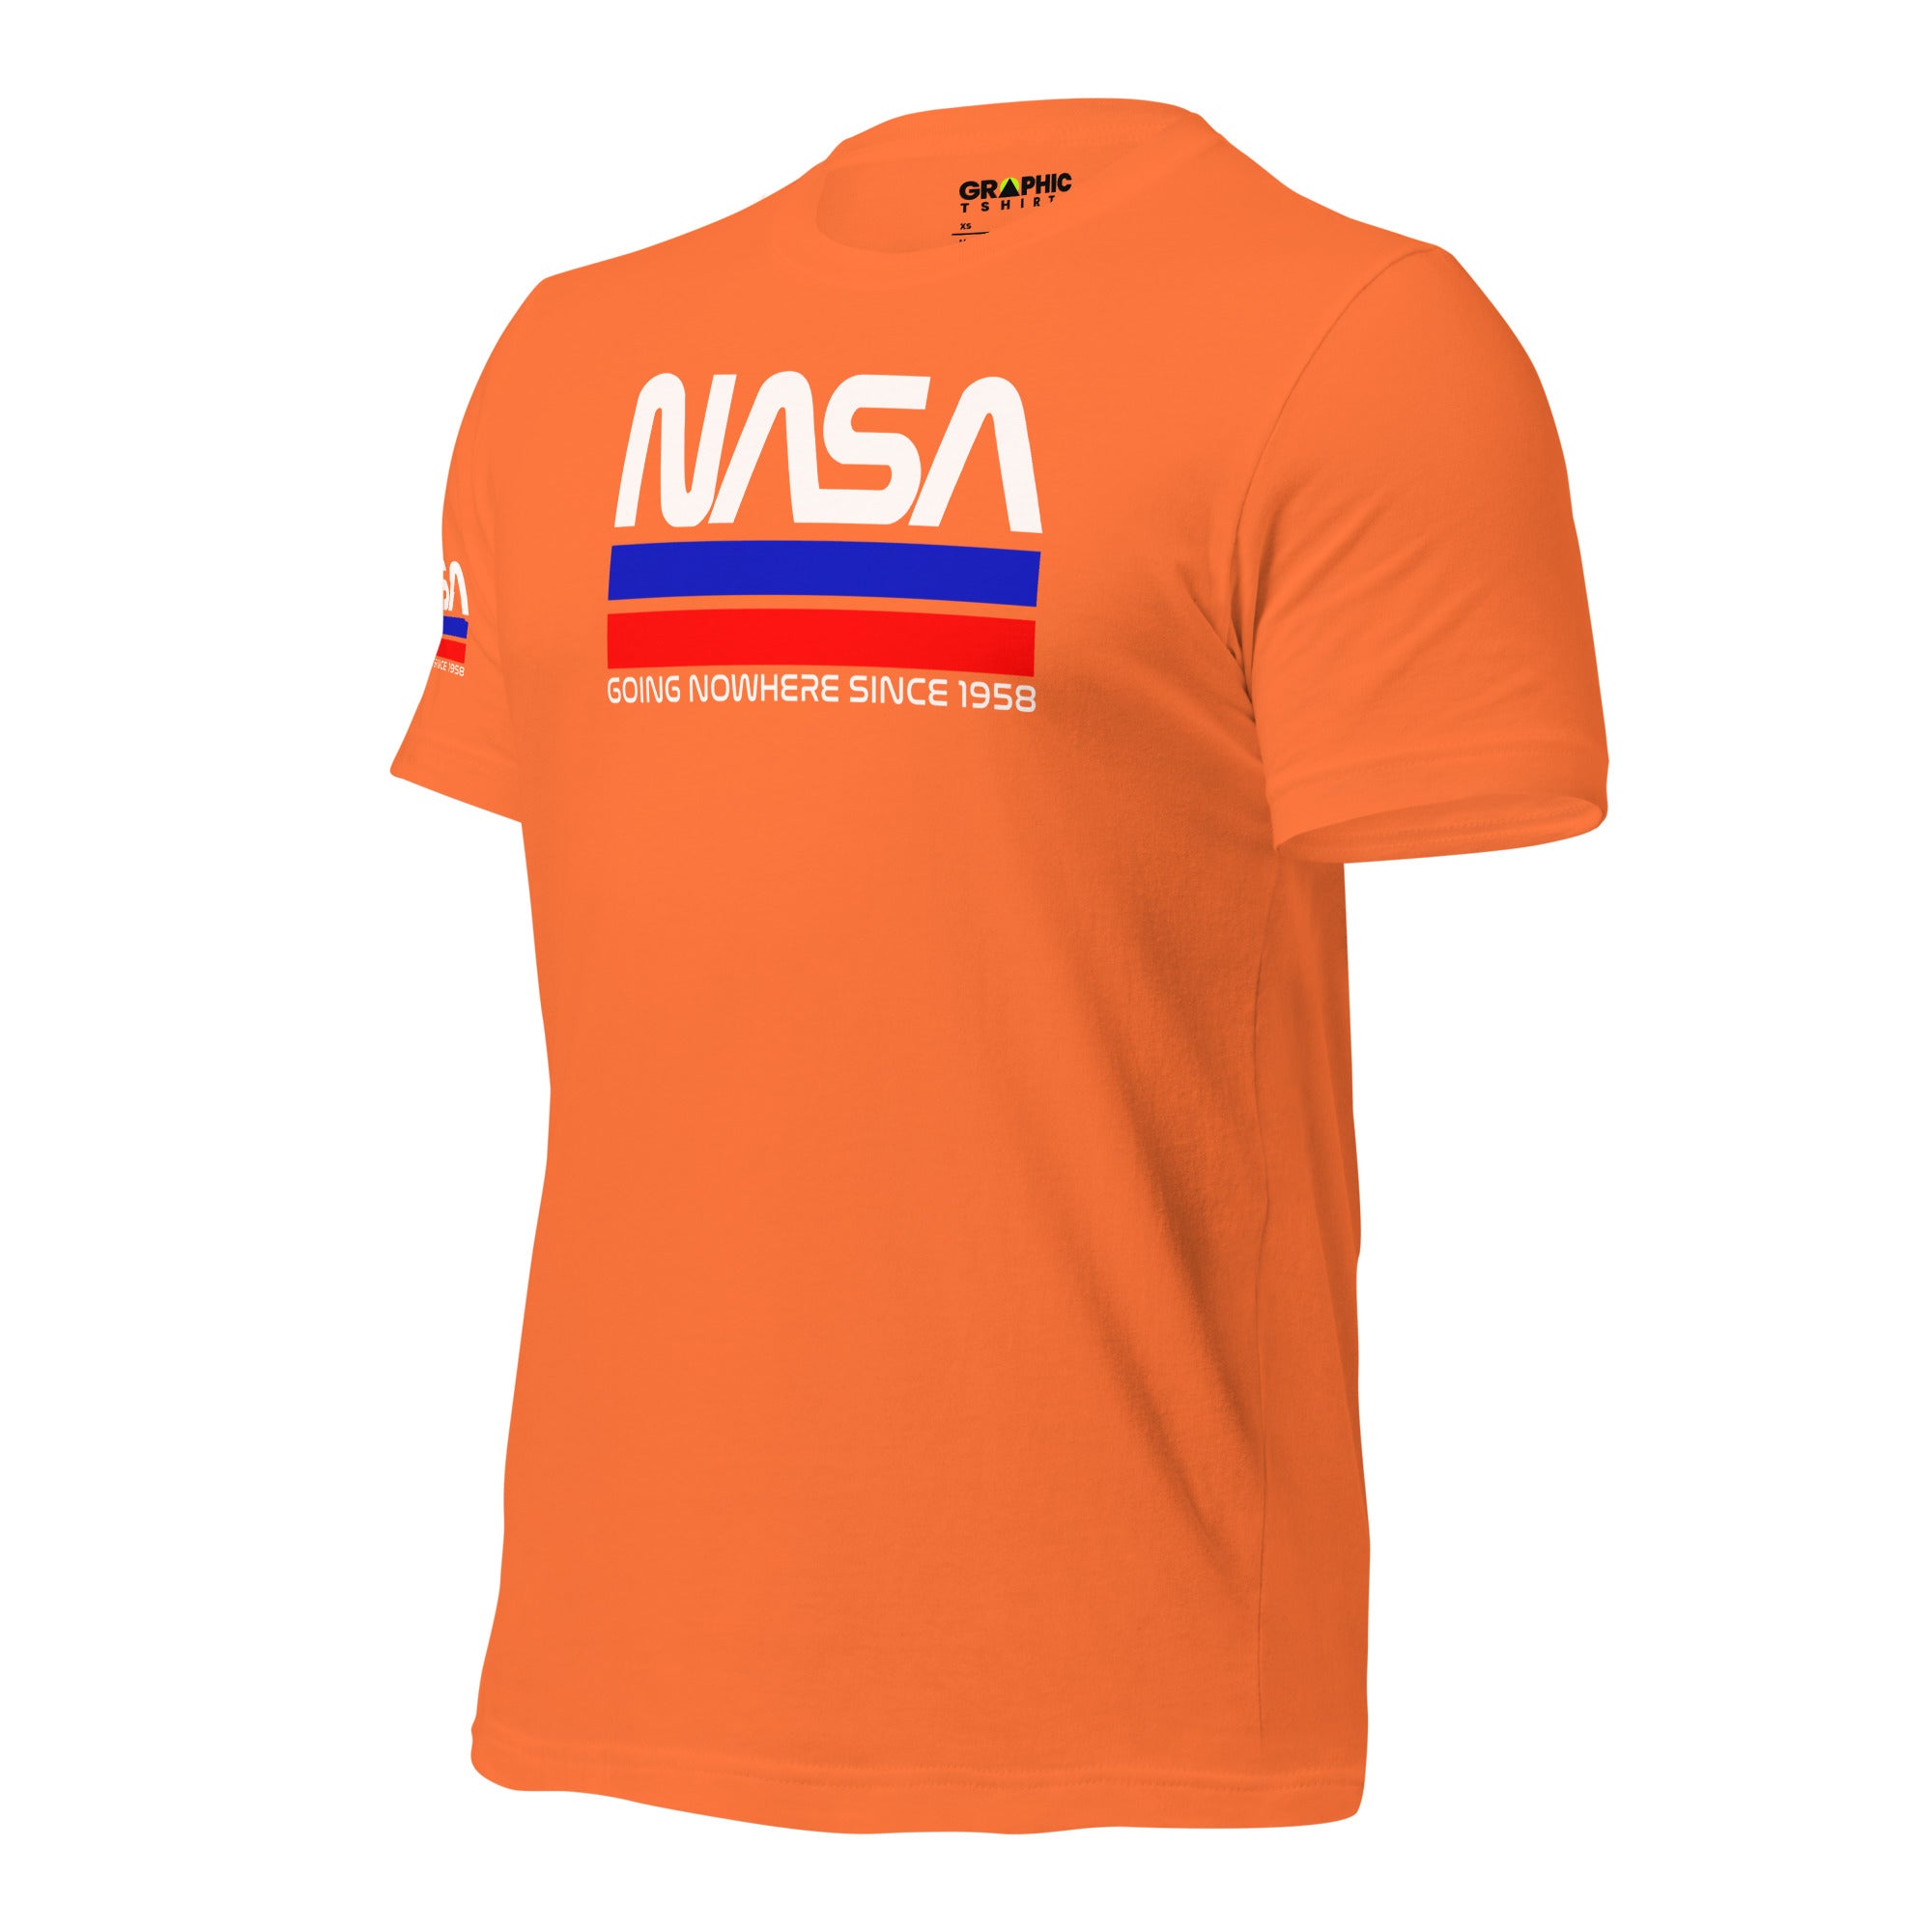 Men's Crew Neck T-Shirt - NASA Going Nowhere Since 1958 - GRAPHIC T-SHIRTS